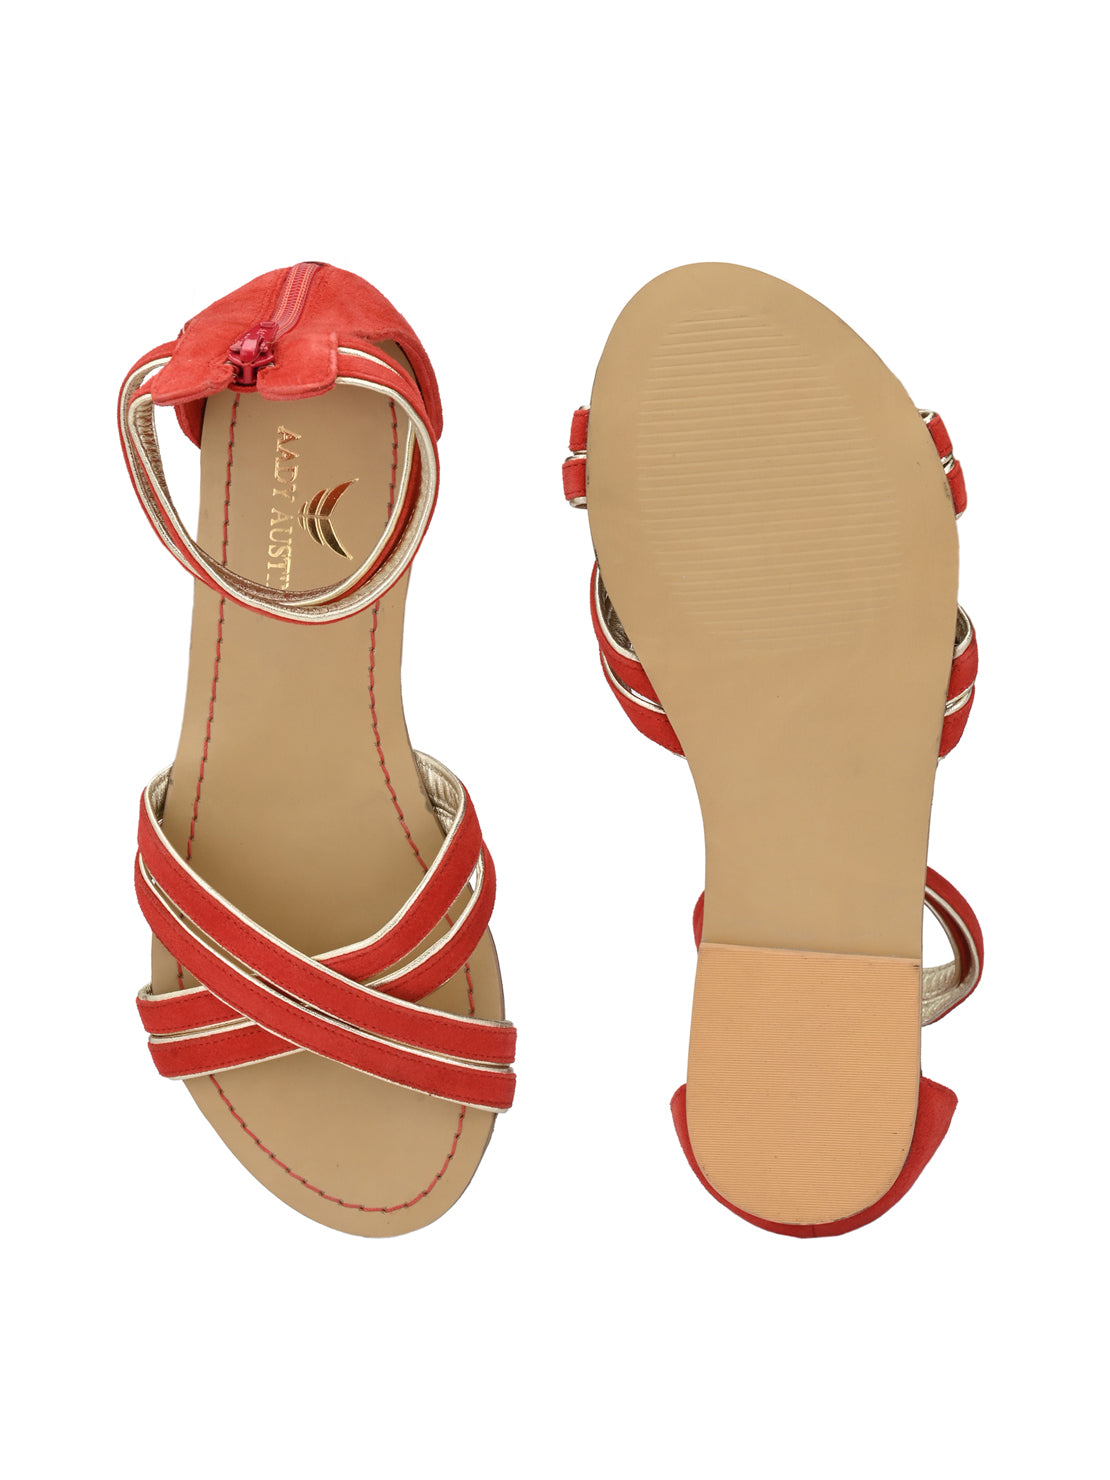 Aady Austin Women Red Open Toe Zip closure Flats Sandals (AUSF19037)